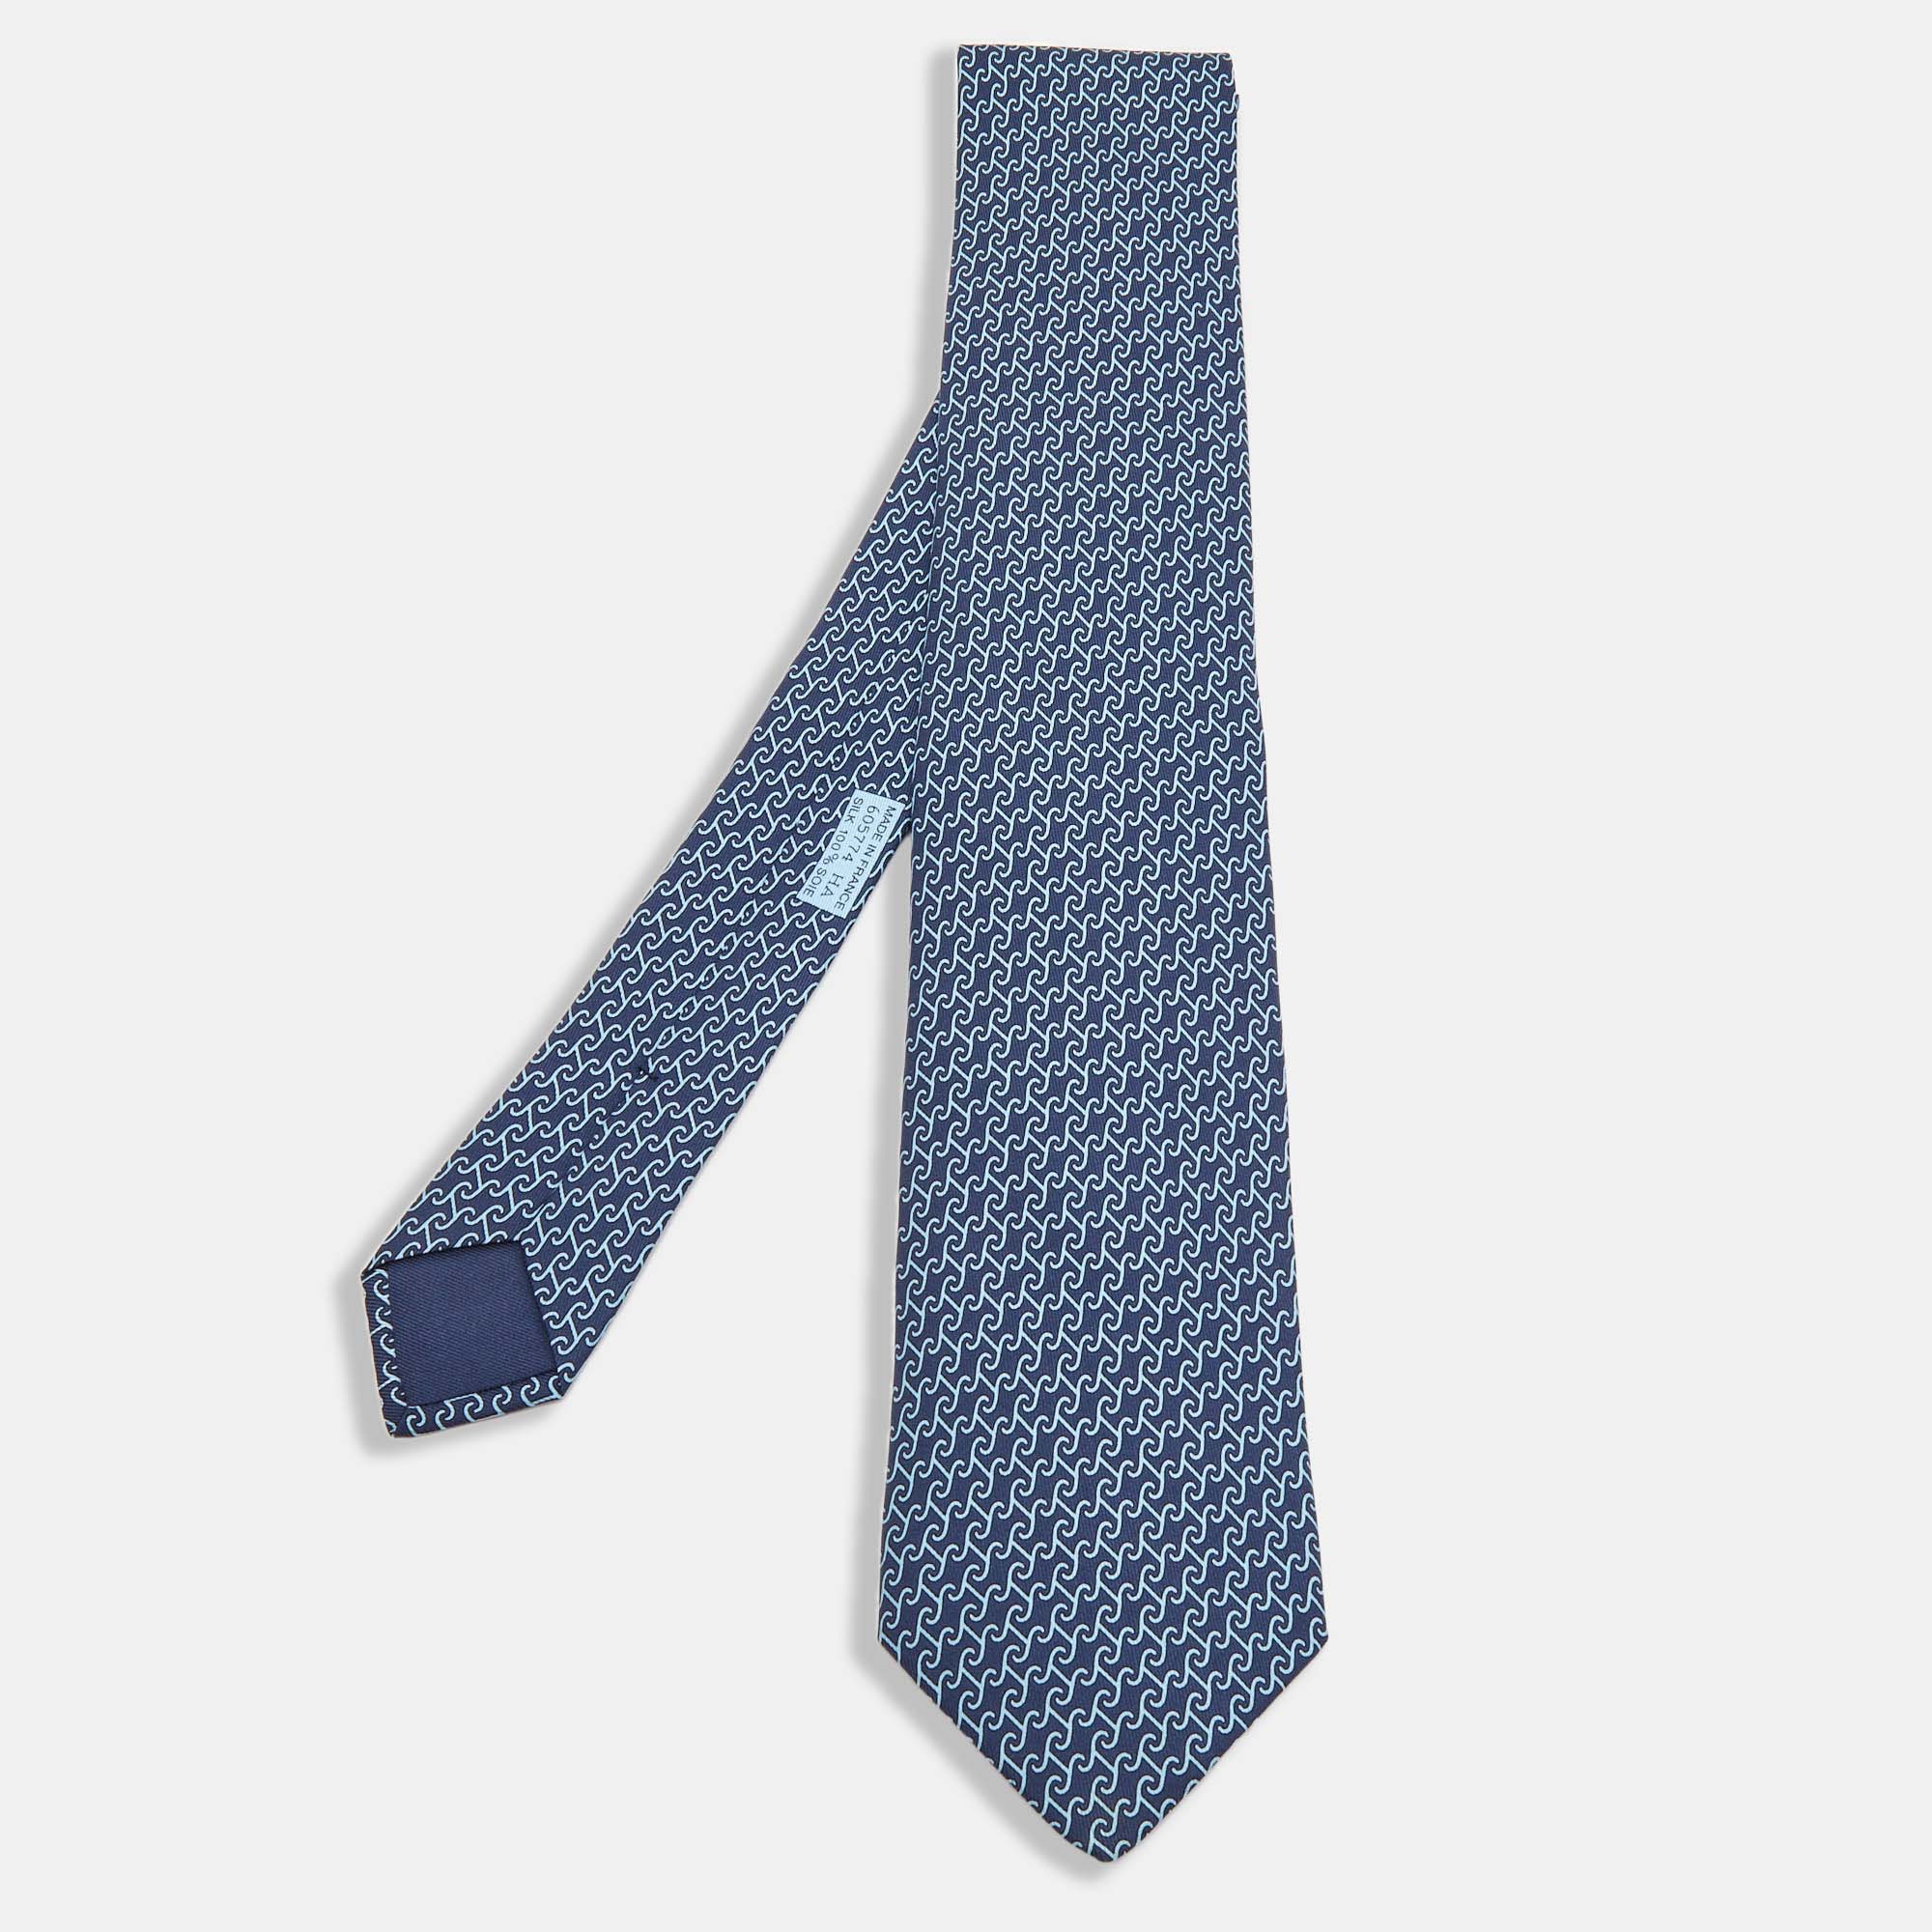 Hermes Dark Blue Twill Printed Silk Heraklion Tie